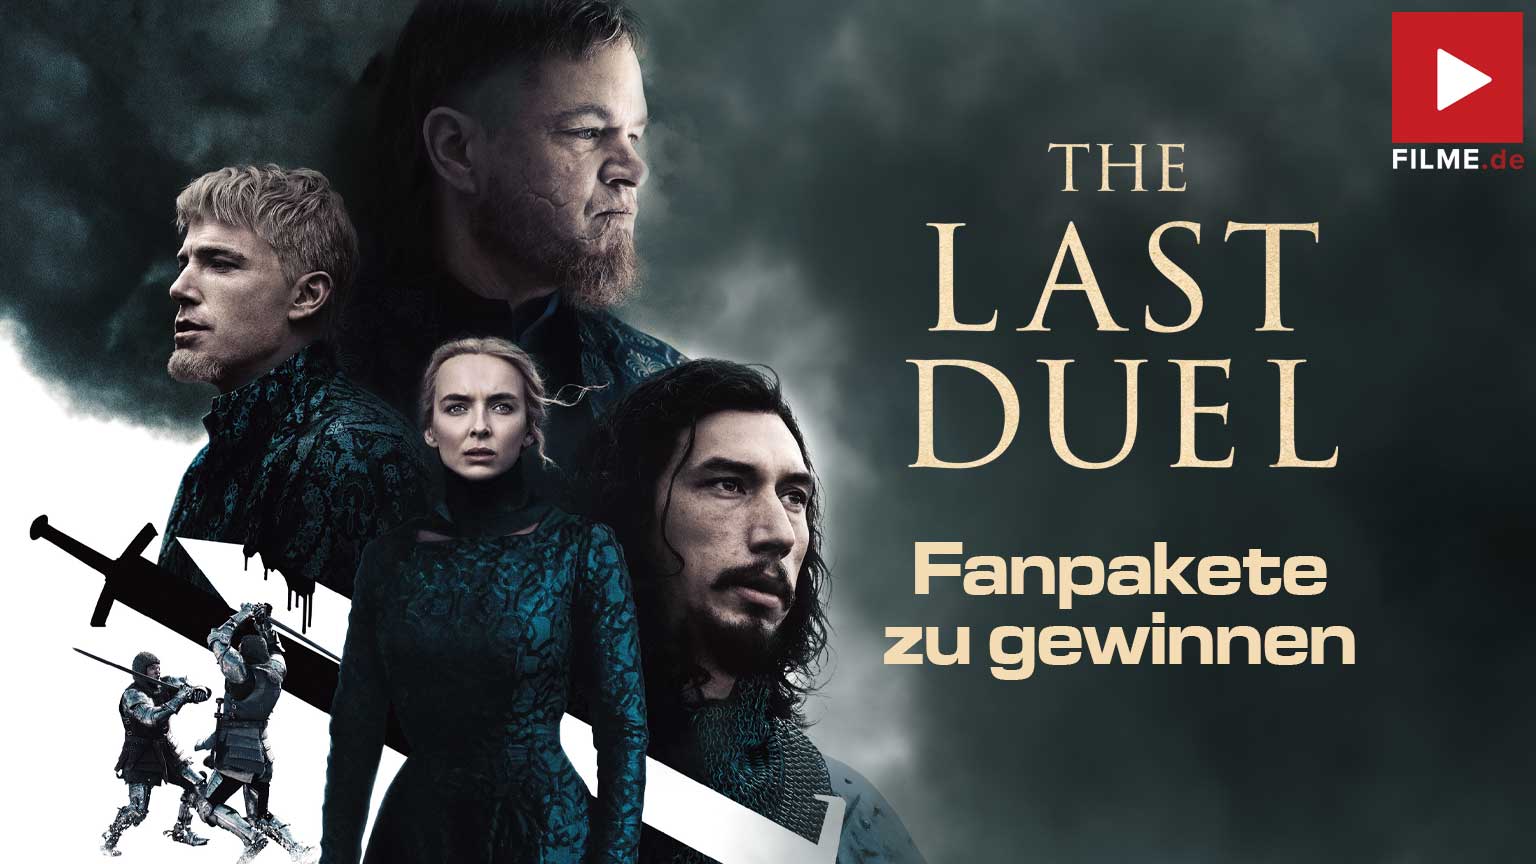 THE LAST DUEL Film 2021 Kino Trailer Gewinnspiel gewinnen Artikelbild